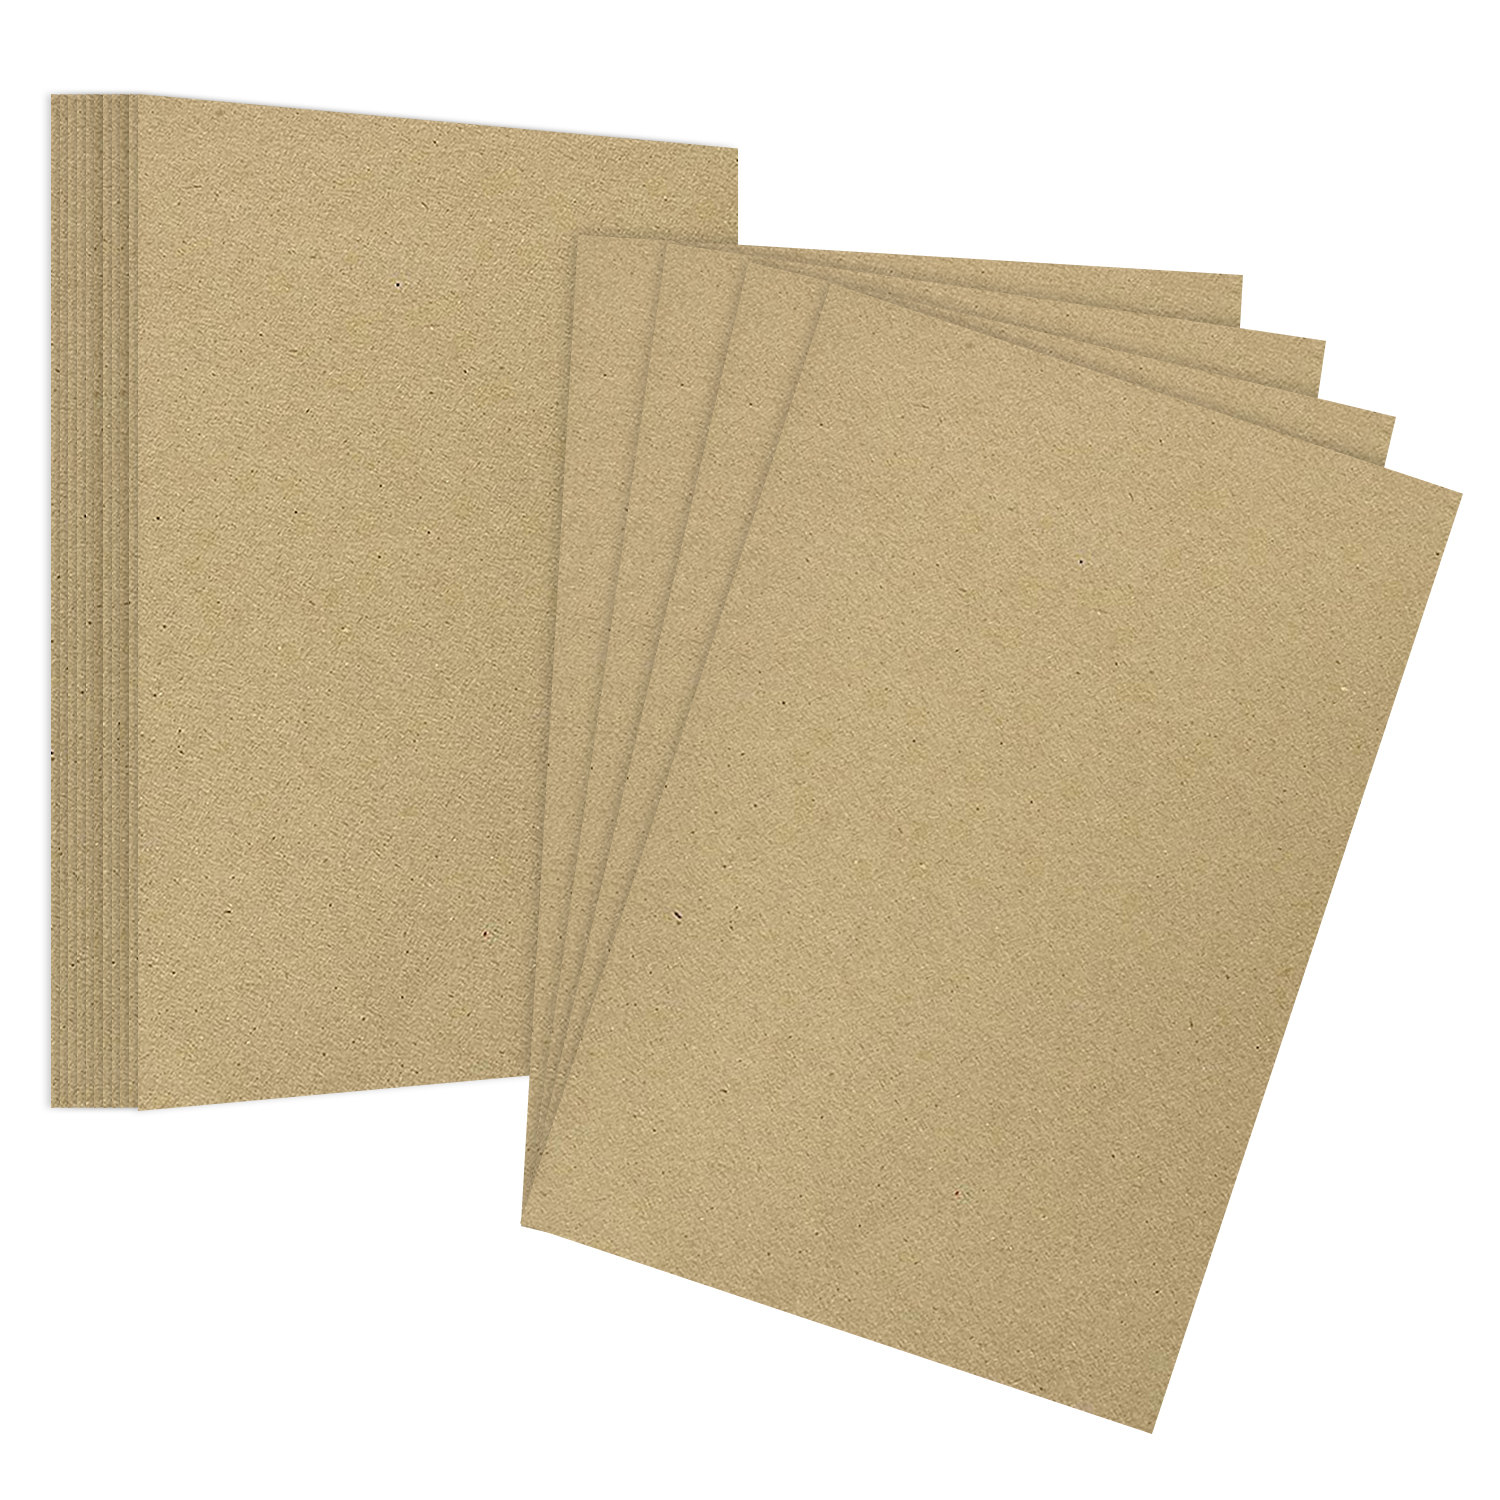 100 Sheets Chipboard 12 x 18 inch 22pt Light Weight Brown Kraft Cardboard 